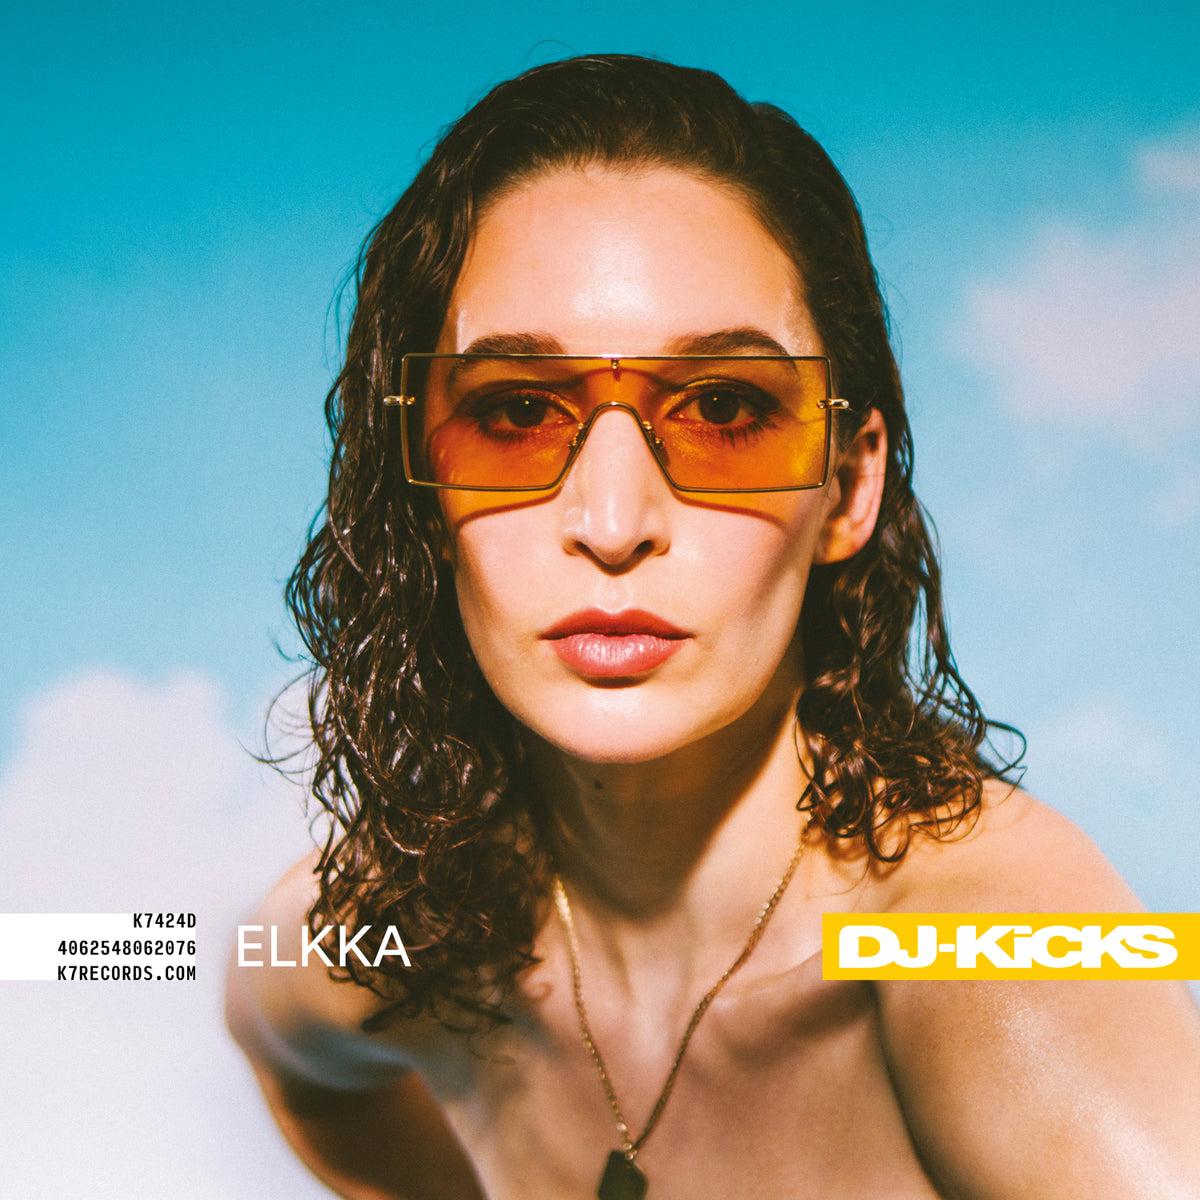 DJ Kicks: Elkka